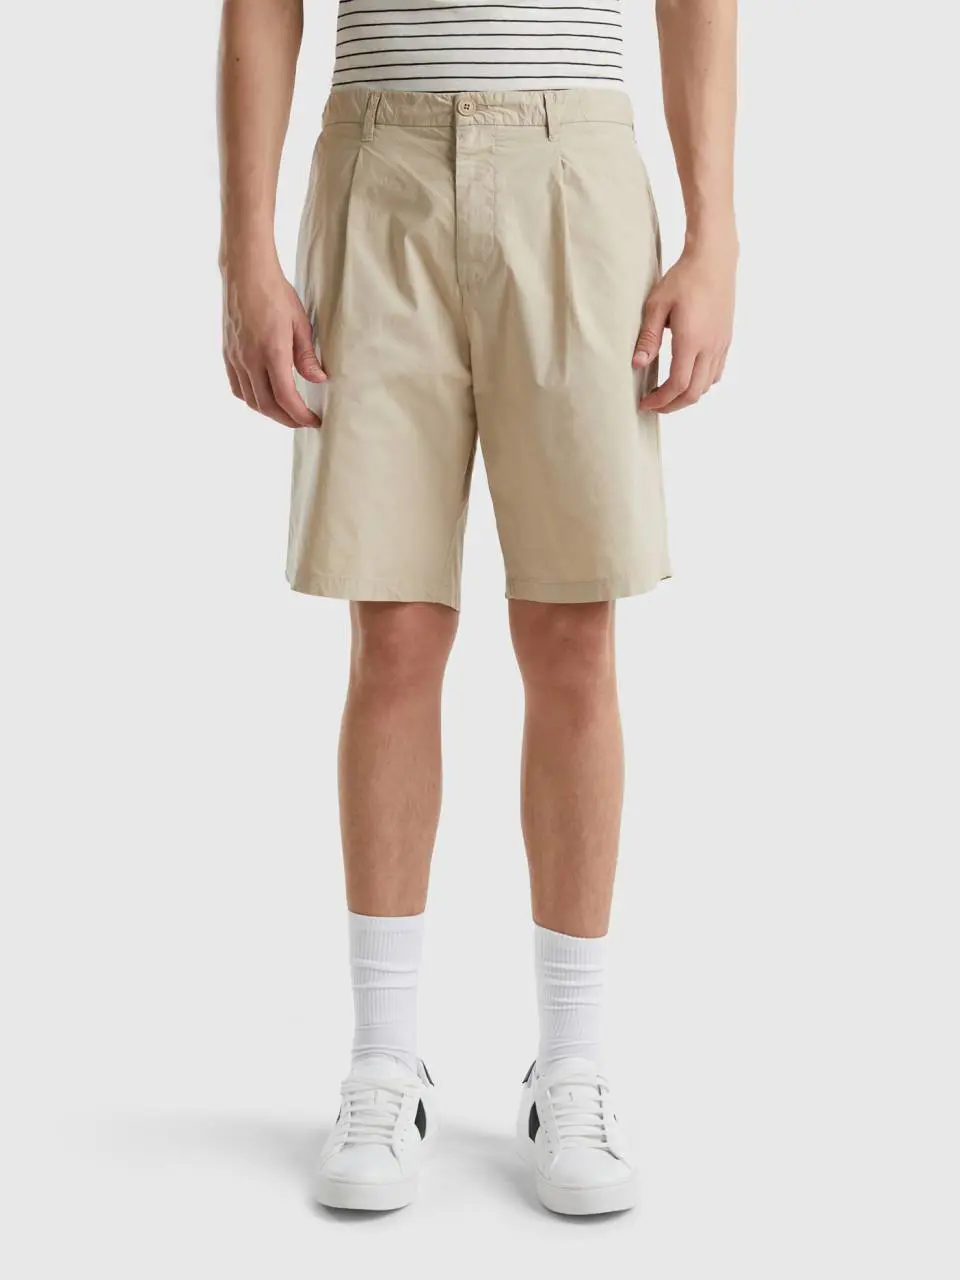 Benetton shorts with pleats. 1